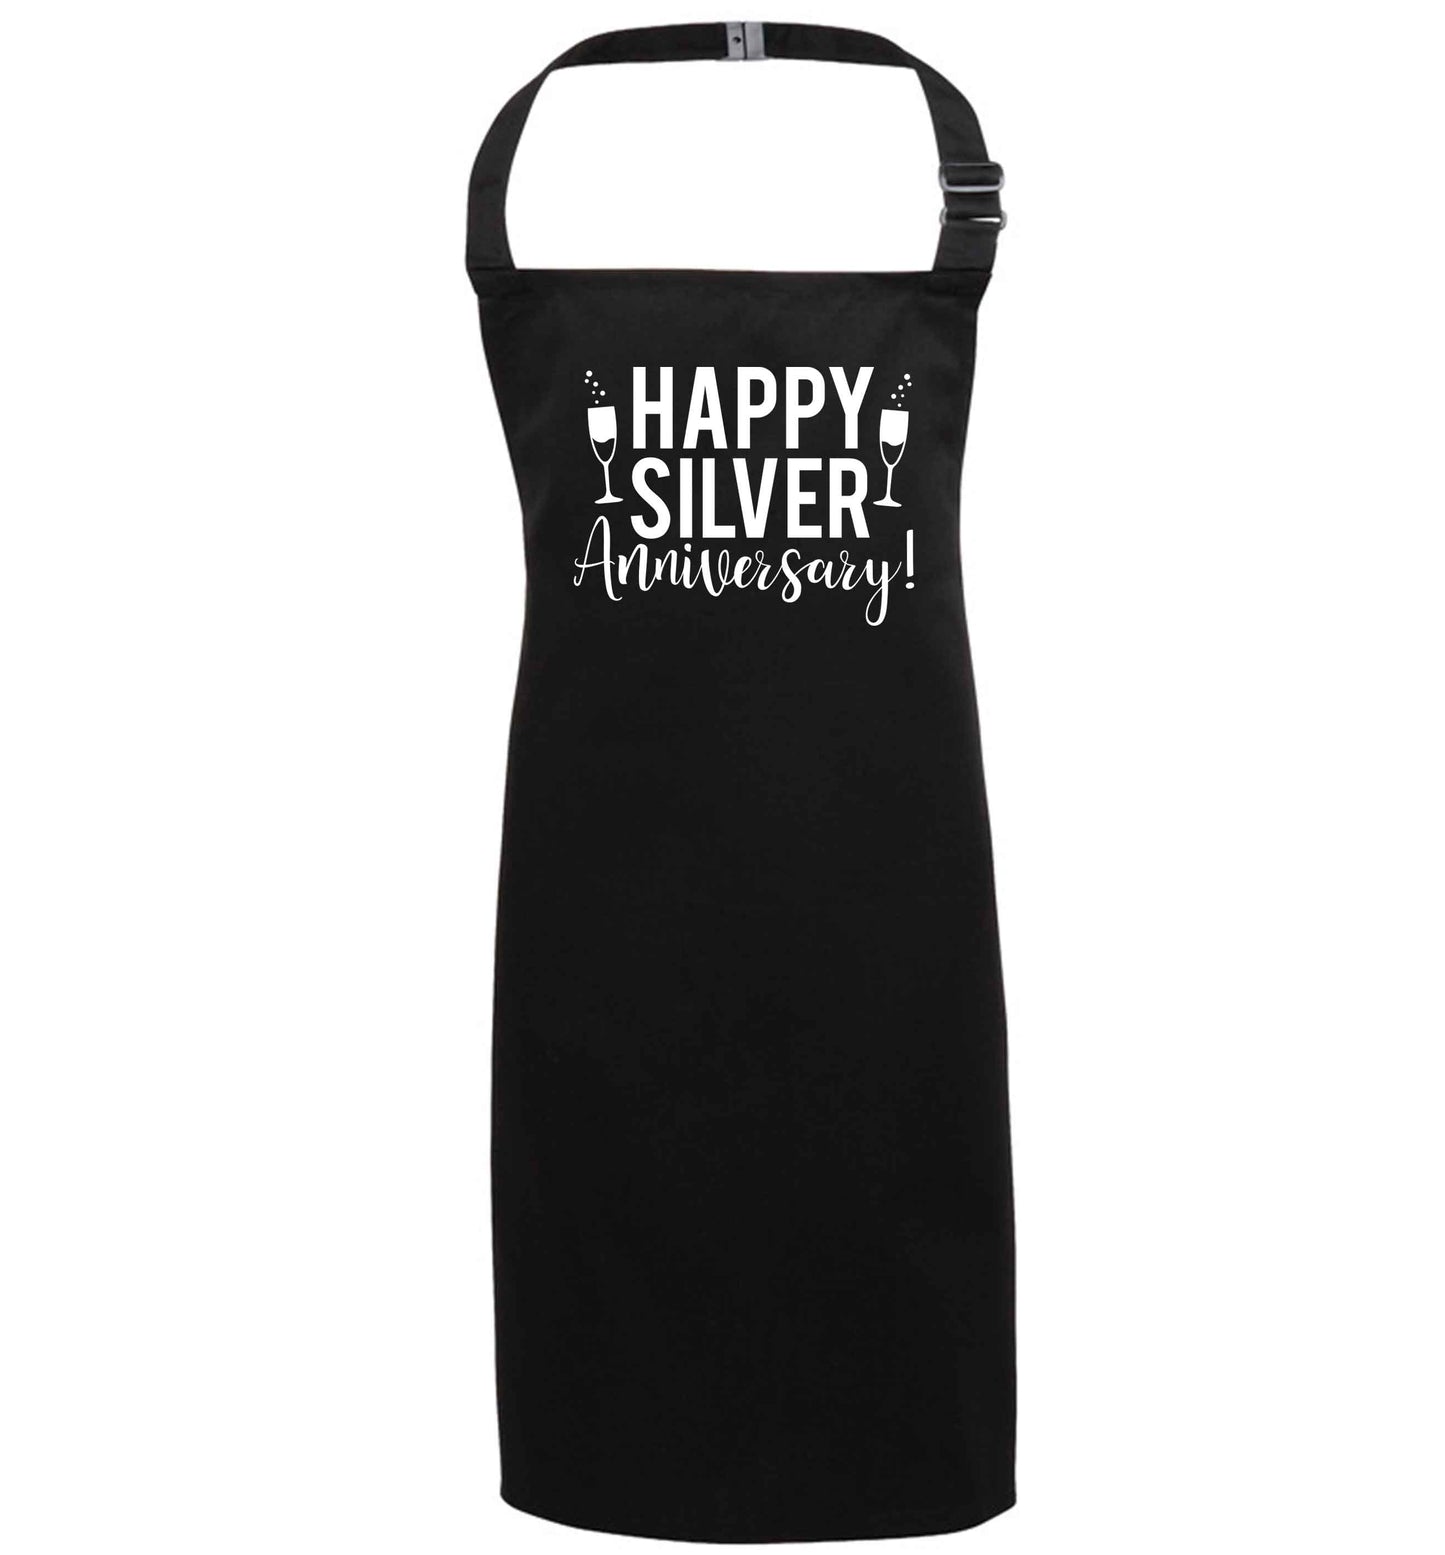 Happy silver anniversary! black apron 7-10 years